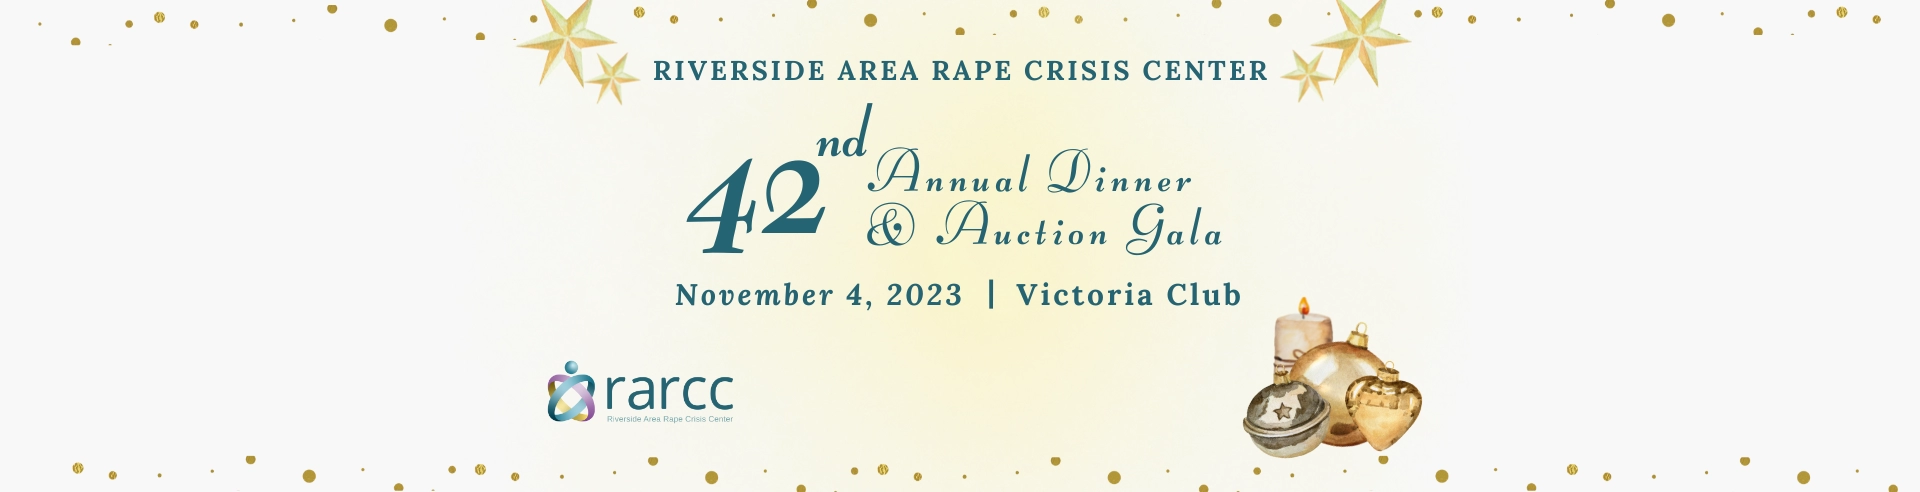 domestic abuse treatment center riverside Riverside Area Rape Crisis Center